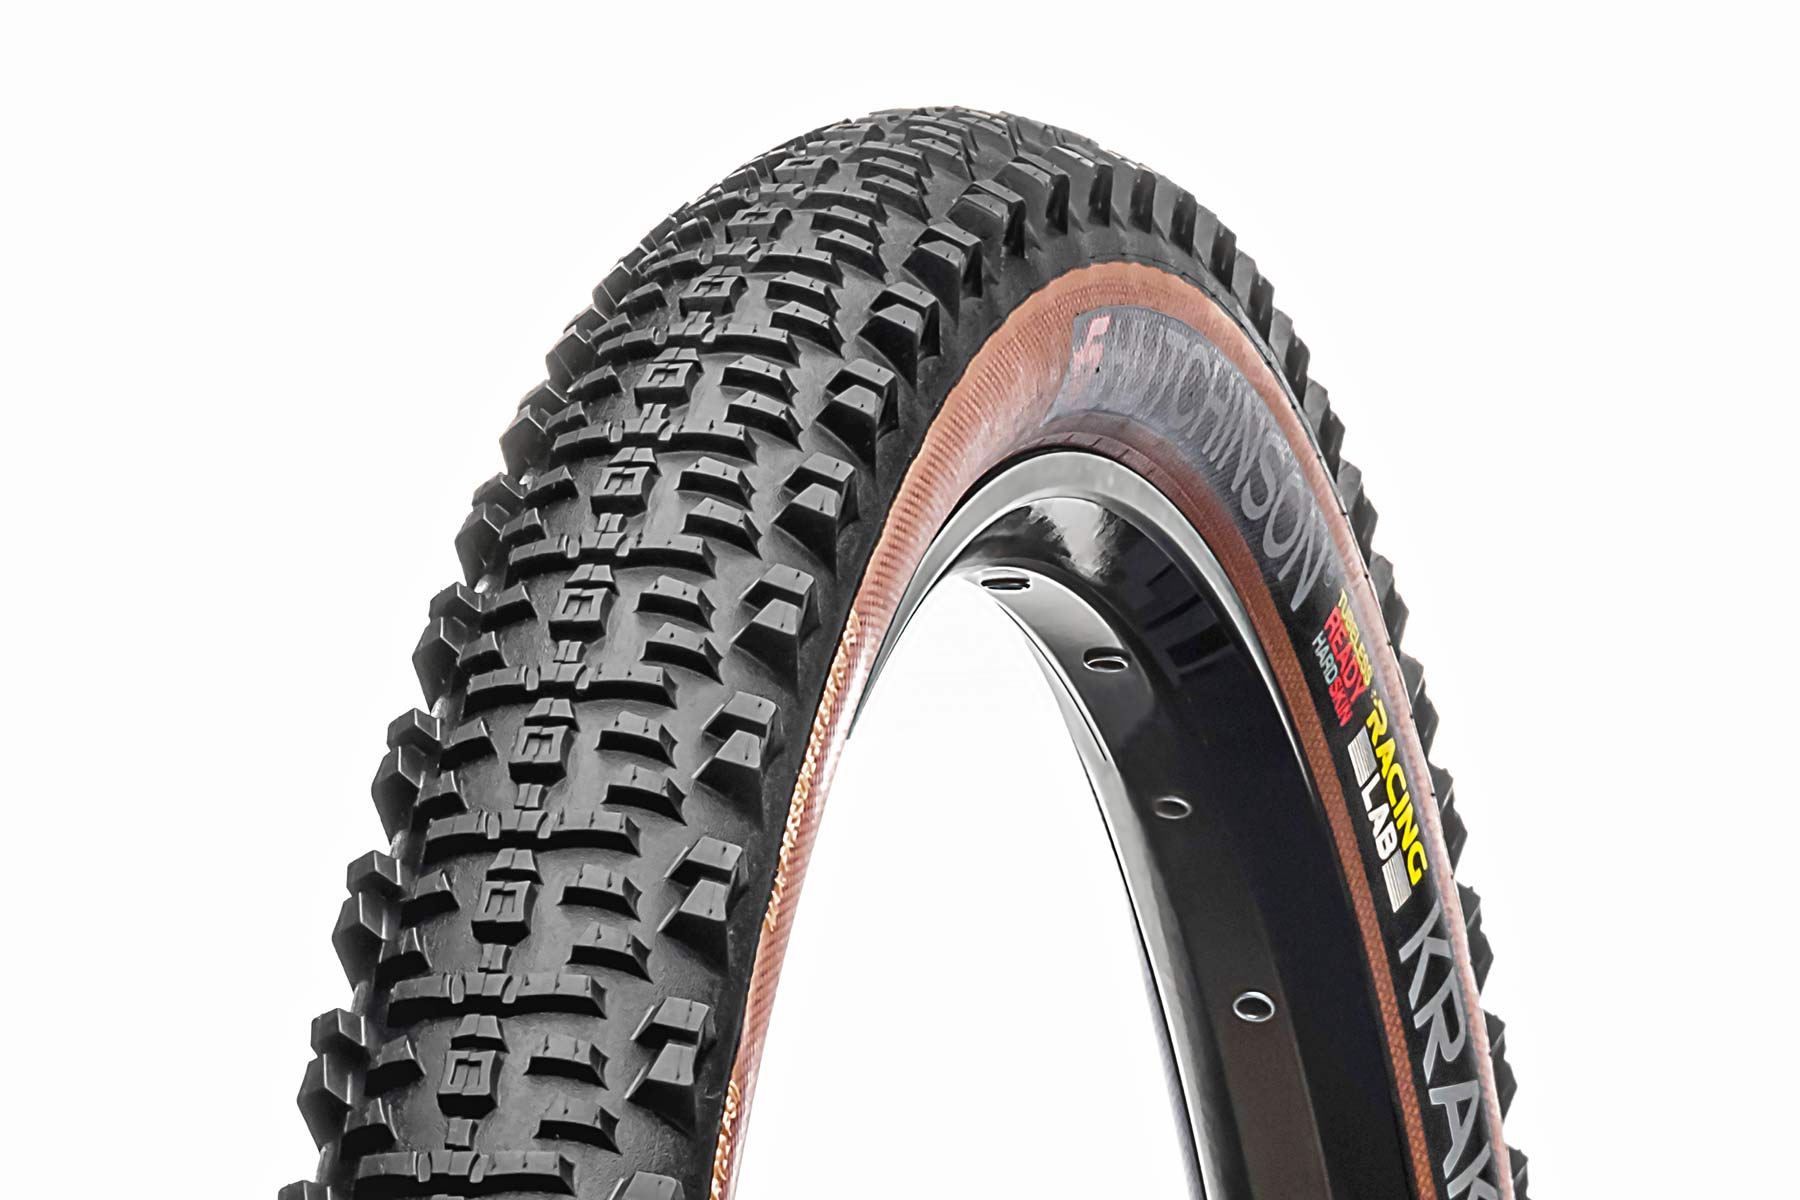 Hutchinson Kraken Racing Lab MTB tire, versatile XC cross-country trail mountain bike tires